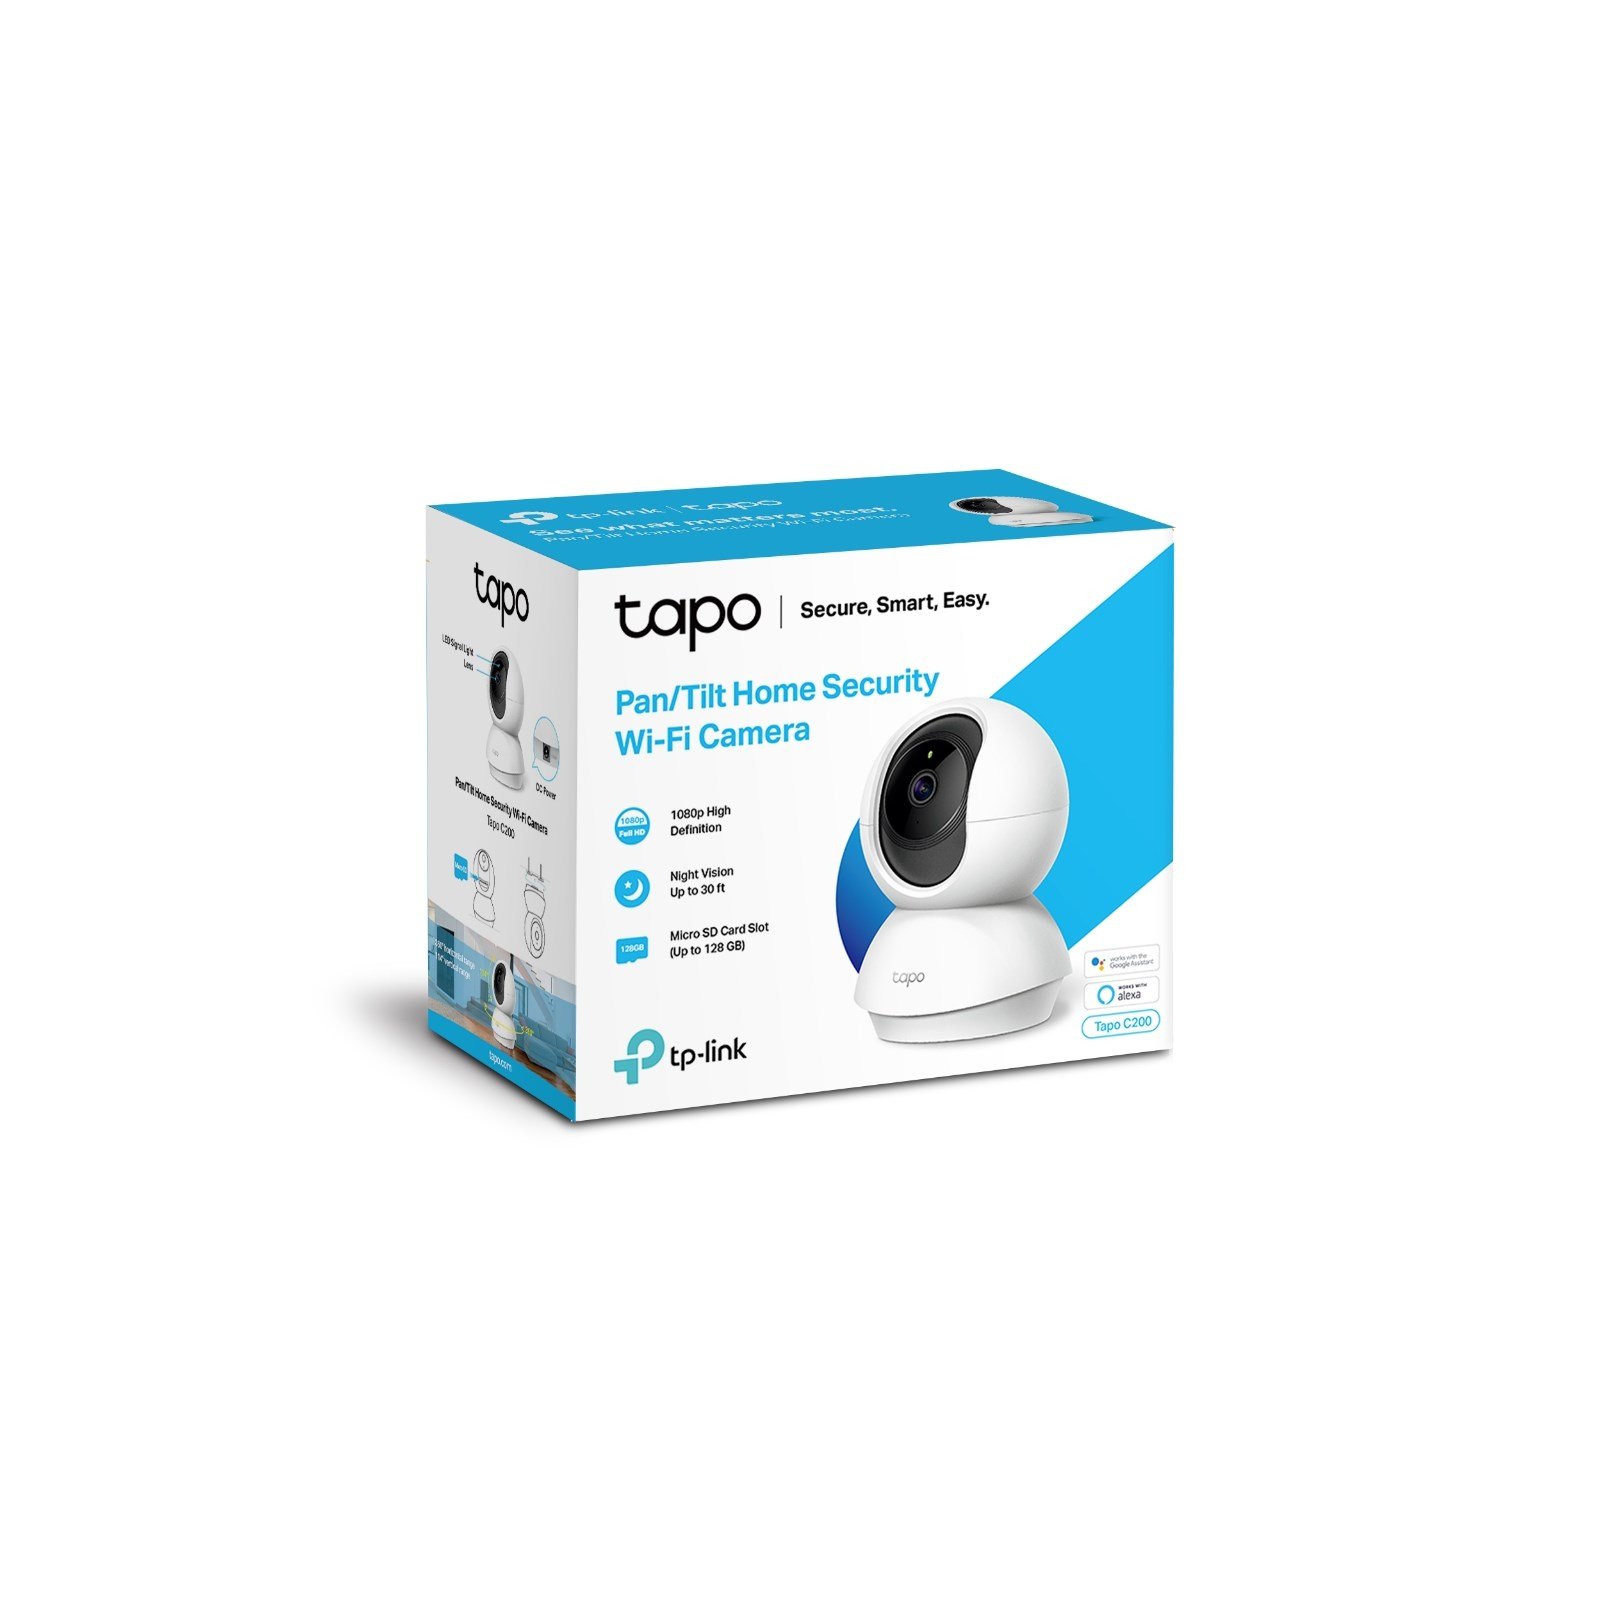 Tp-link 1080p H.264 Pan/tilt Home Security Wi-fi Camera, Tapo C200  (tapoc200)